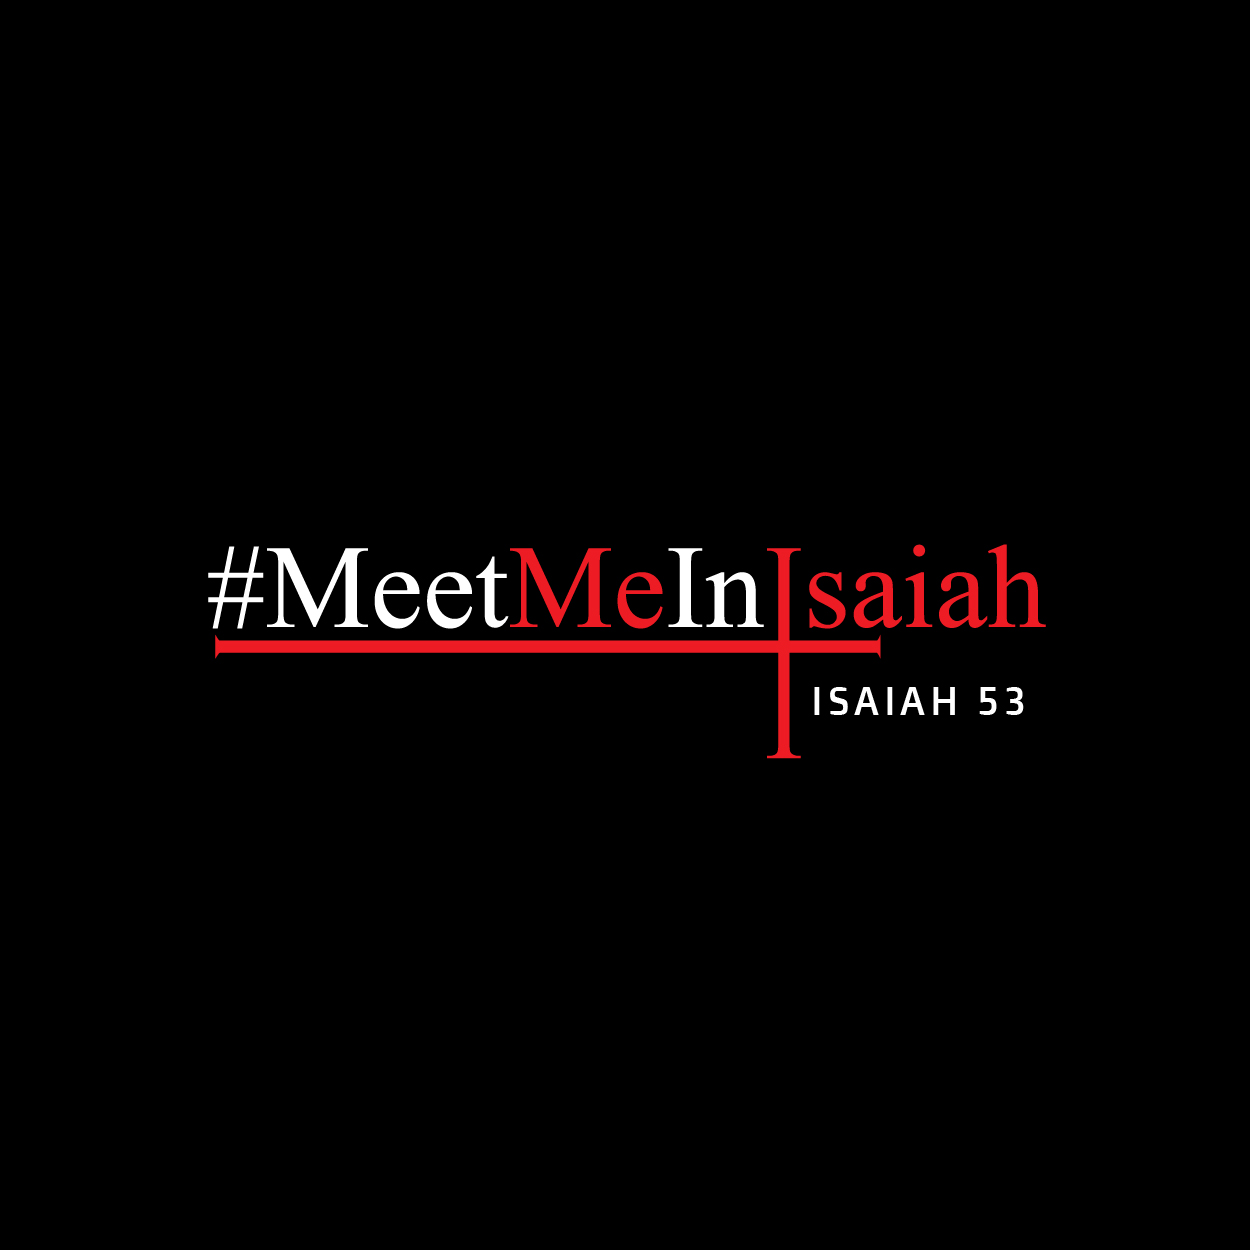 Meet-Me-In-Isaiah-logo